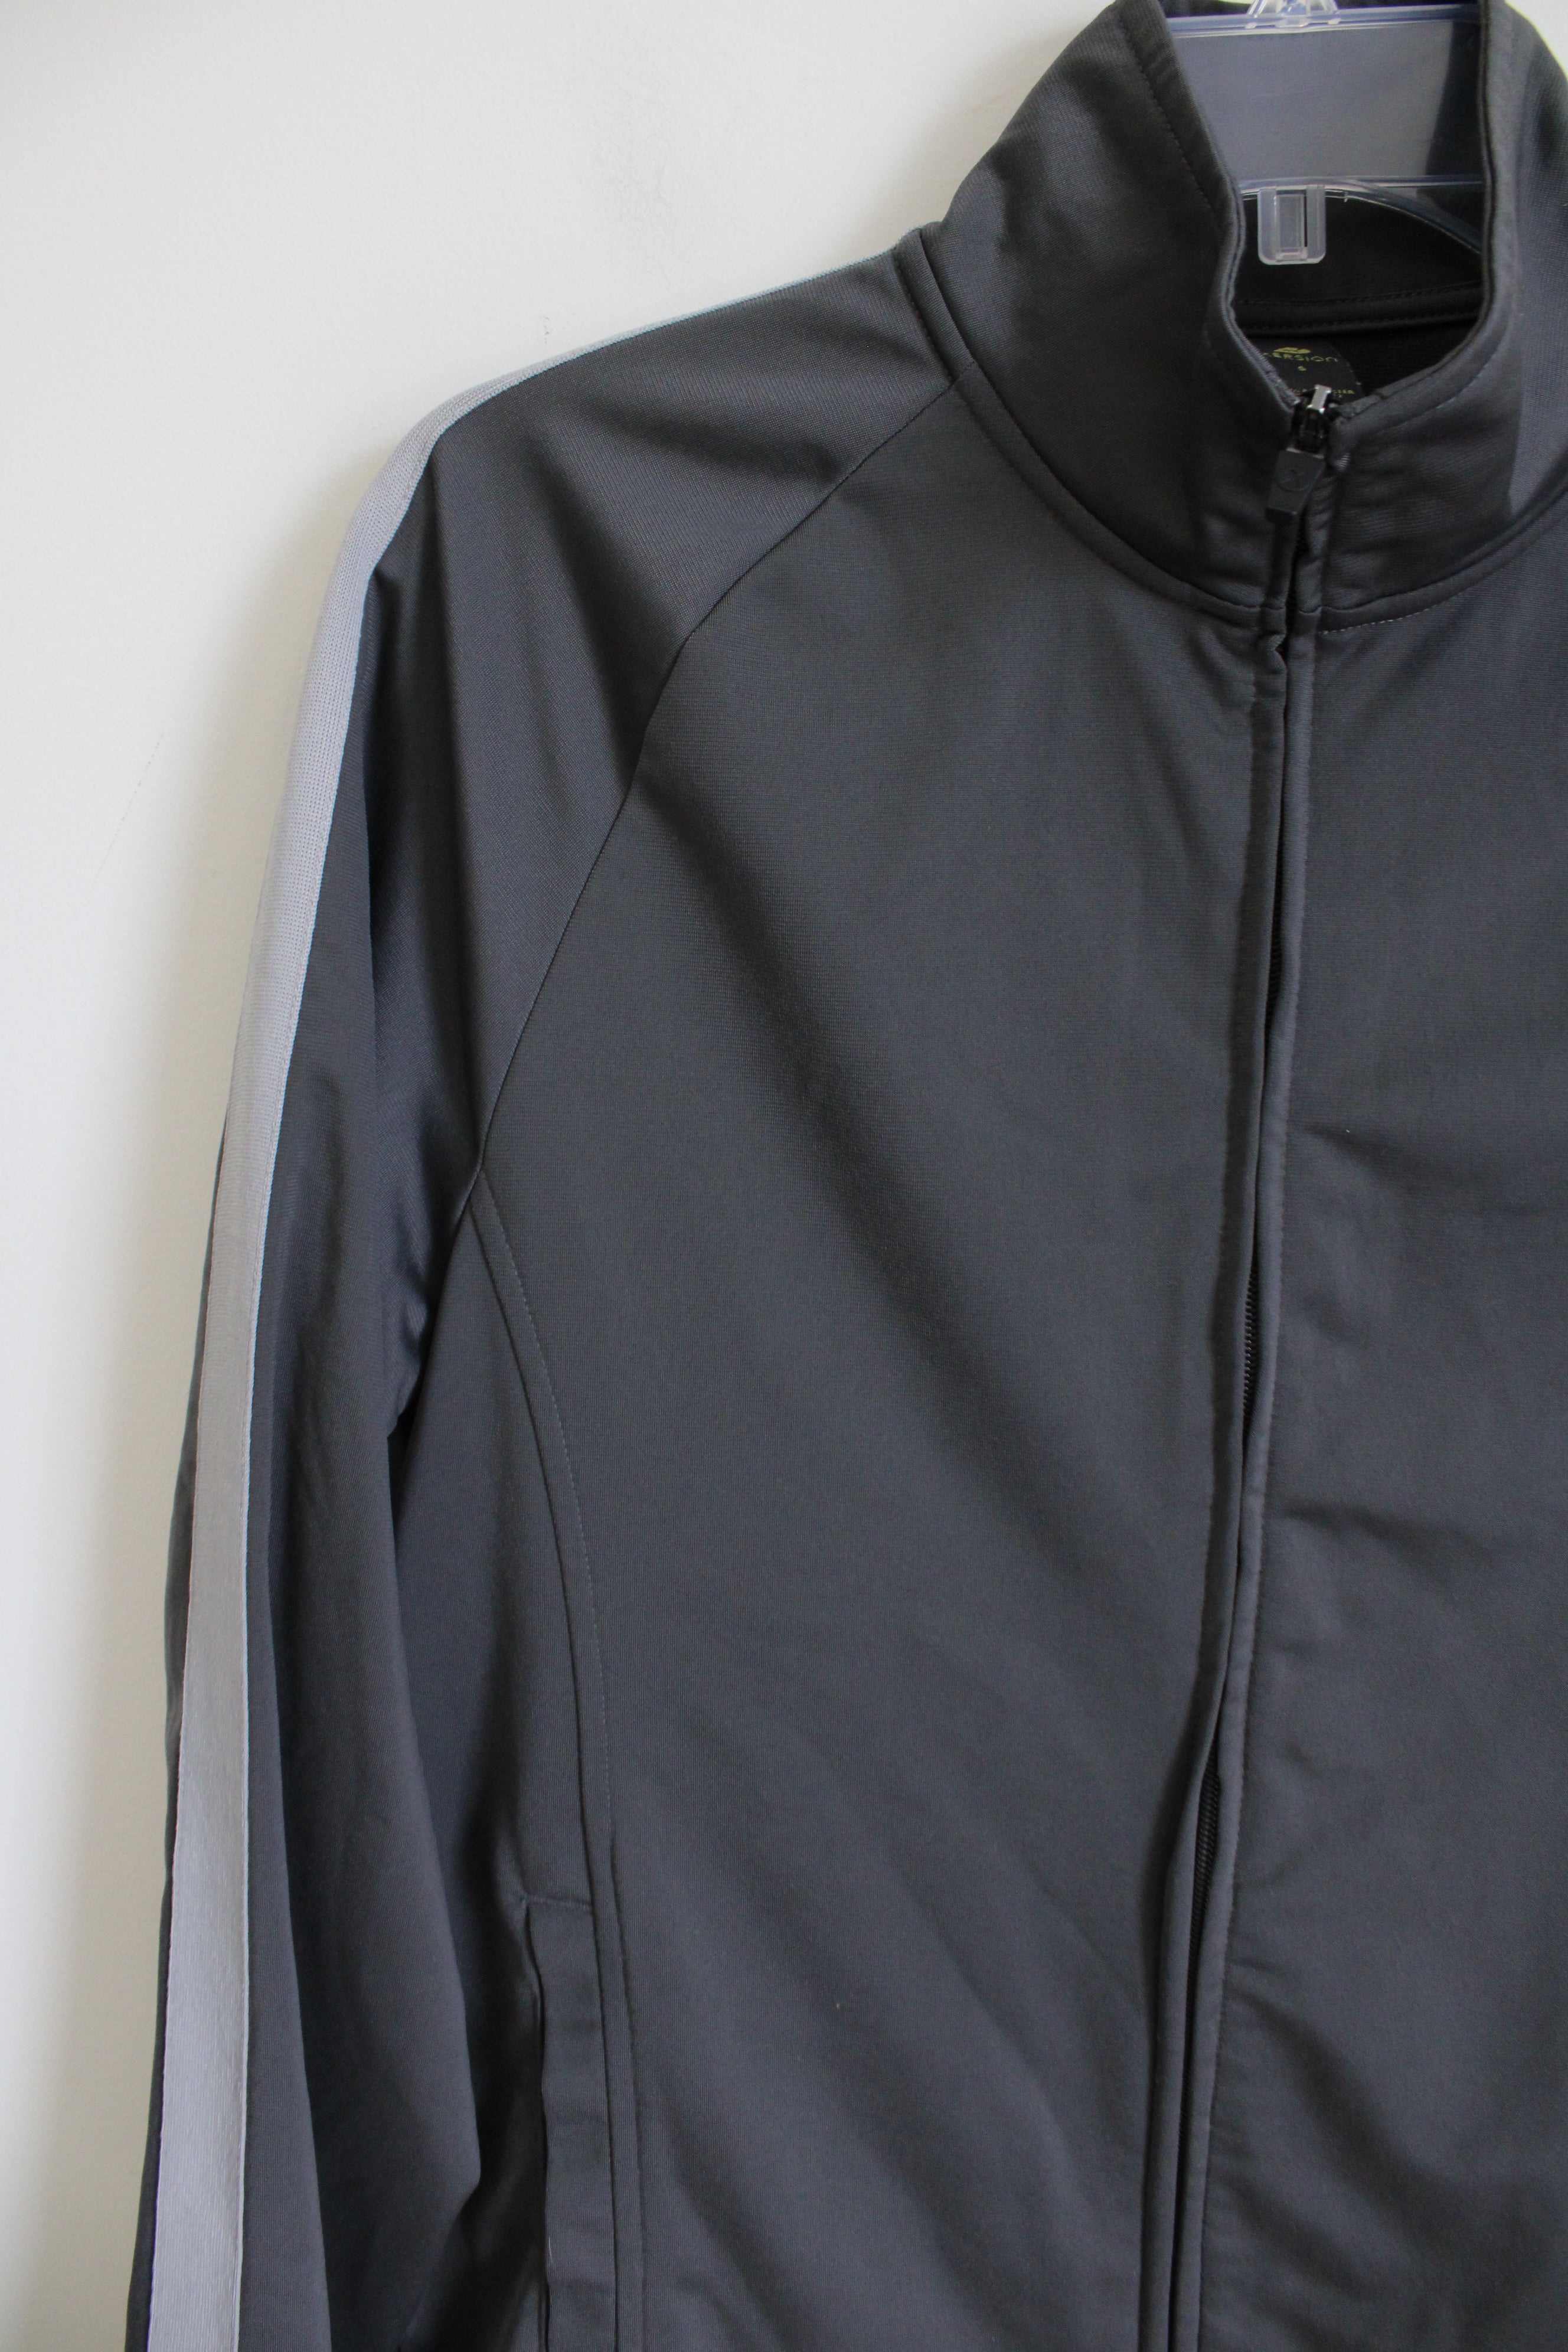 Xersion Gray Athletic Full Zip Jacket | S